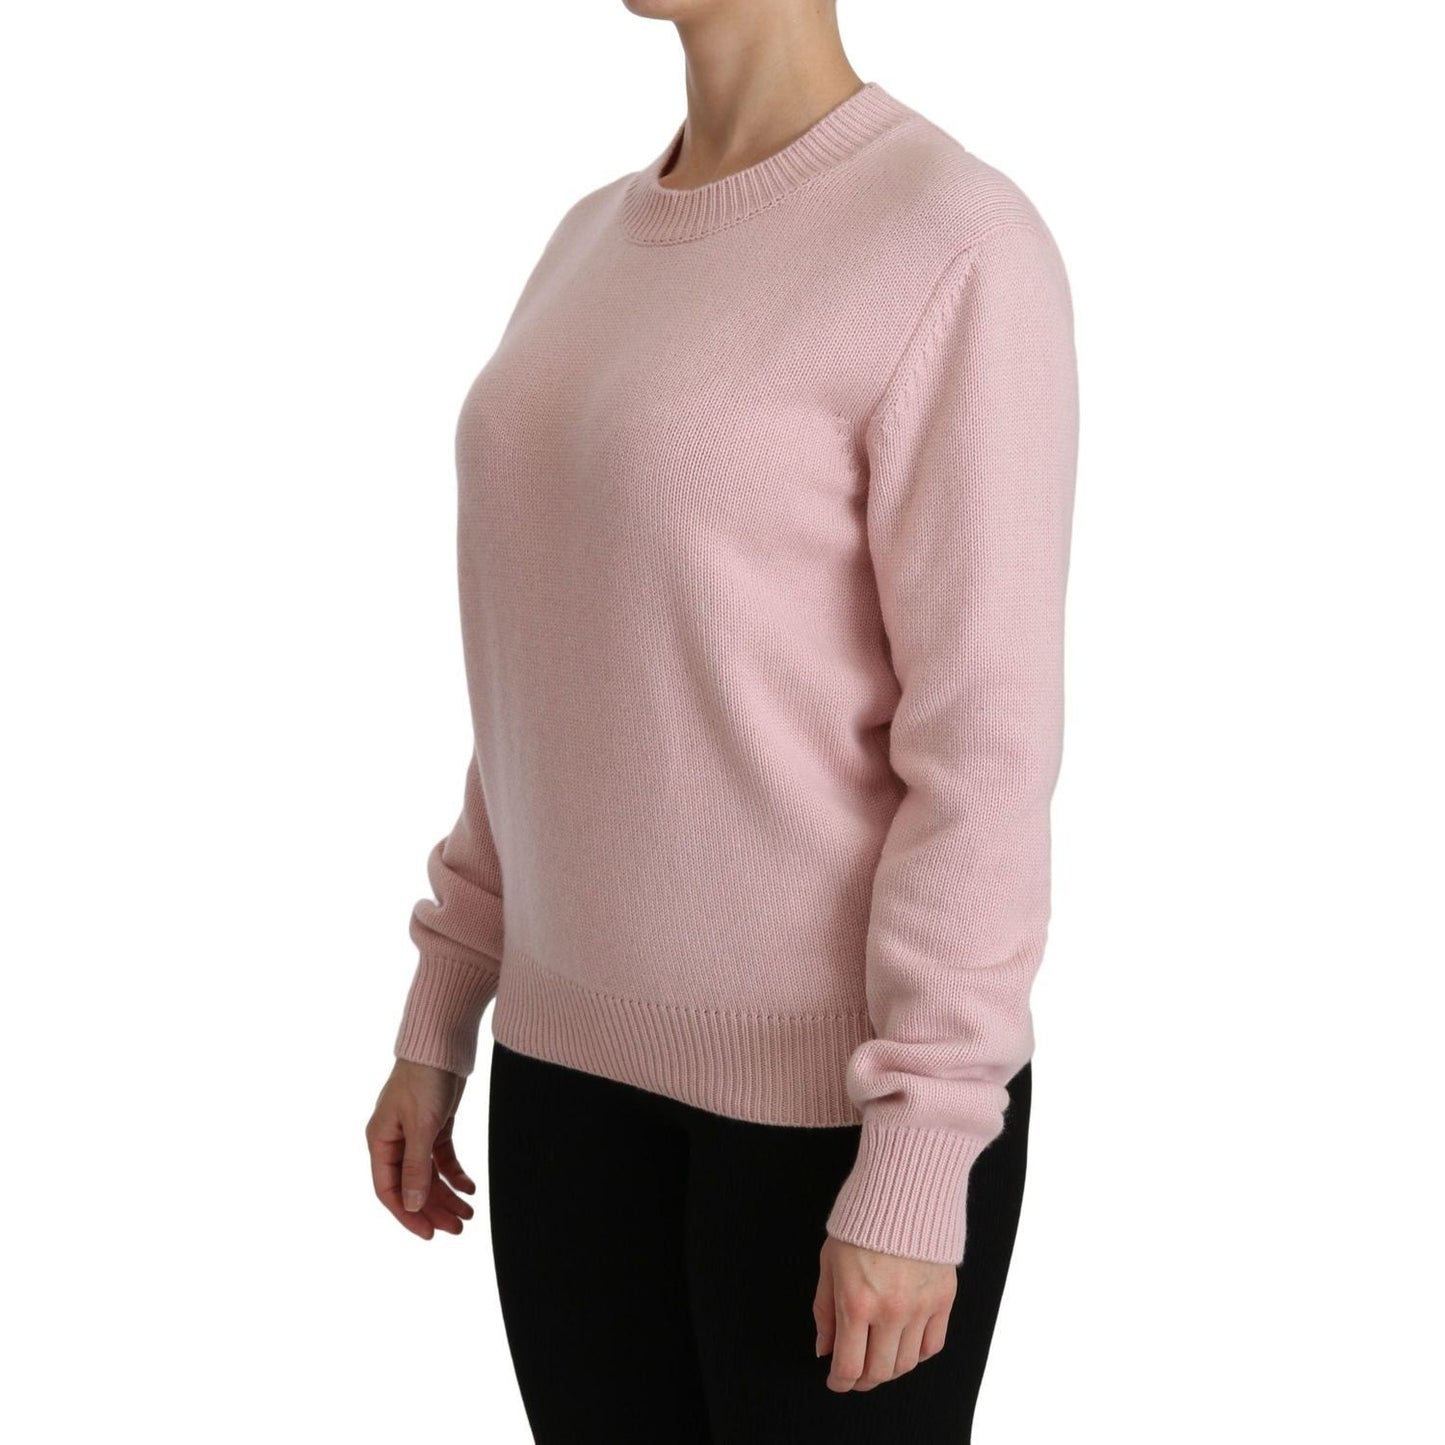 Dolce & Gabbana Cashmere-Blend Pink Crew Neck Sweater pink-crew-neck-cashmere-pullover-sweater